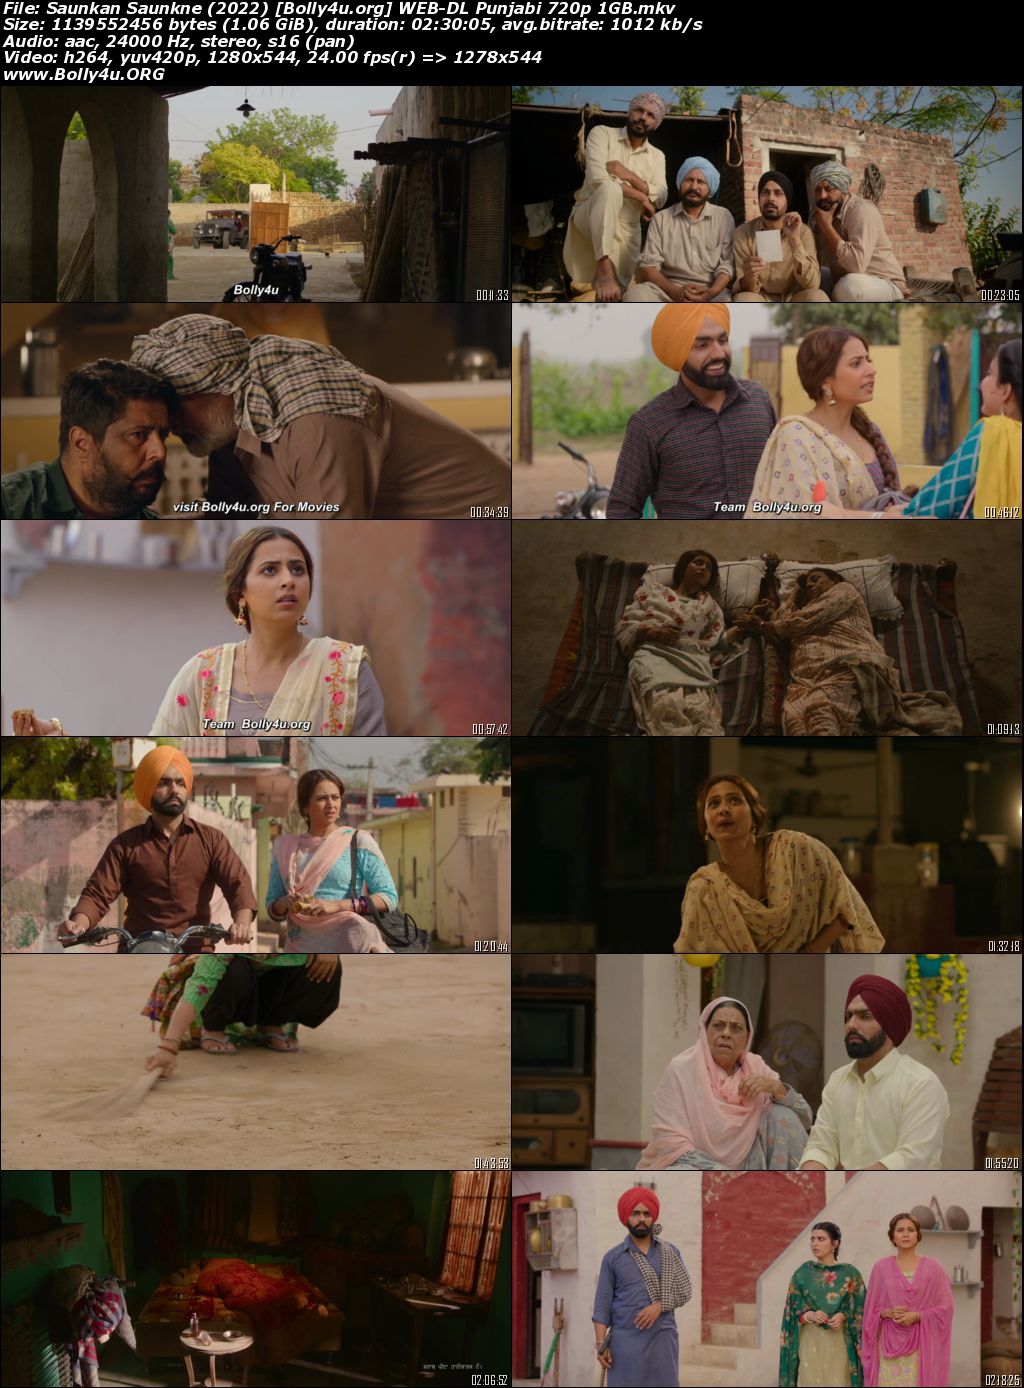 Saunkan Saunkne 2022 WEB-DL Punjabi Movie Download